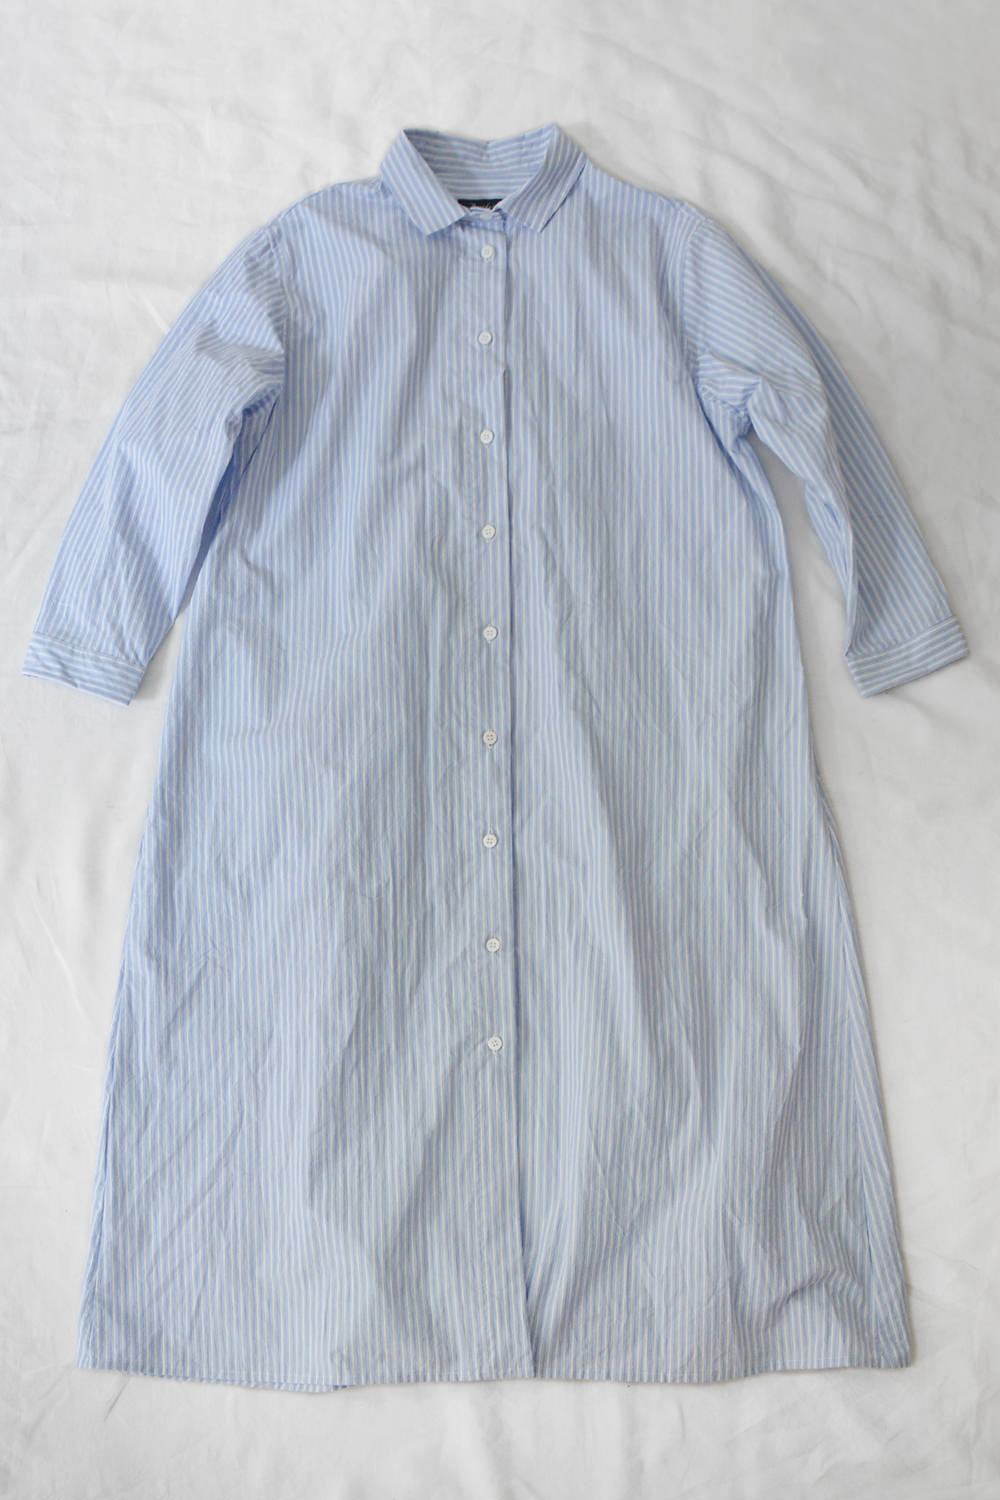 bergfabel shirt dress blue stripe main picture